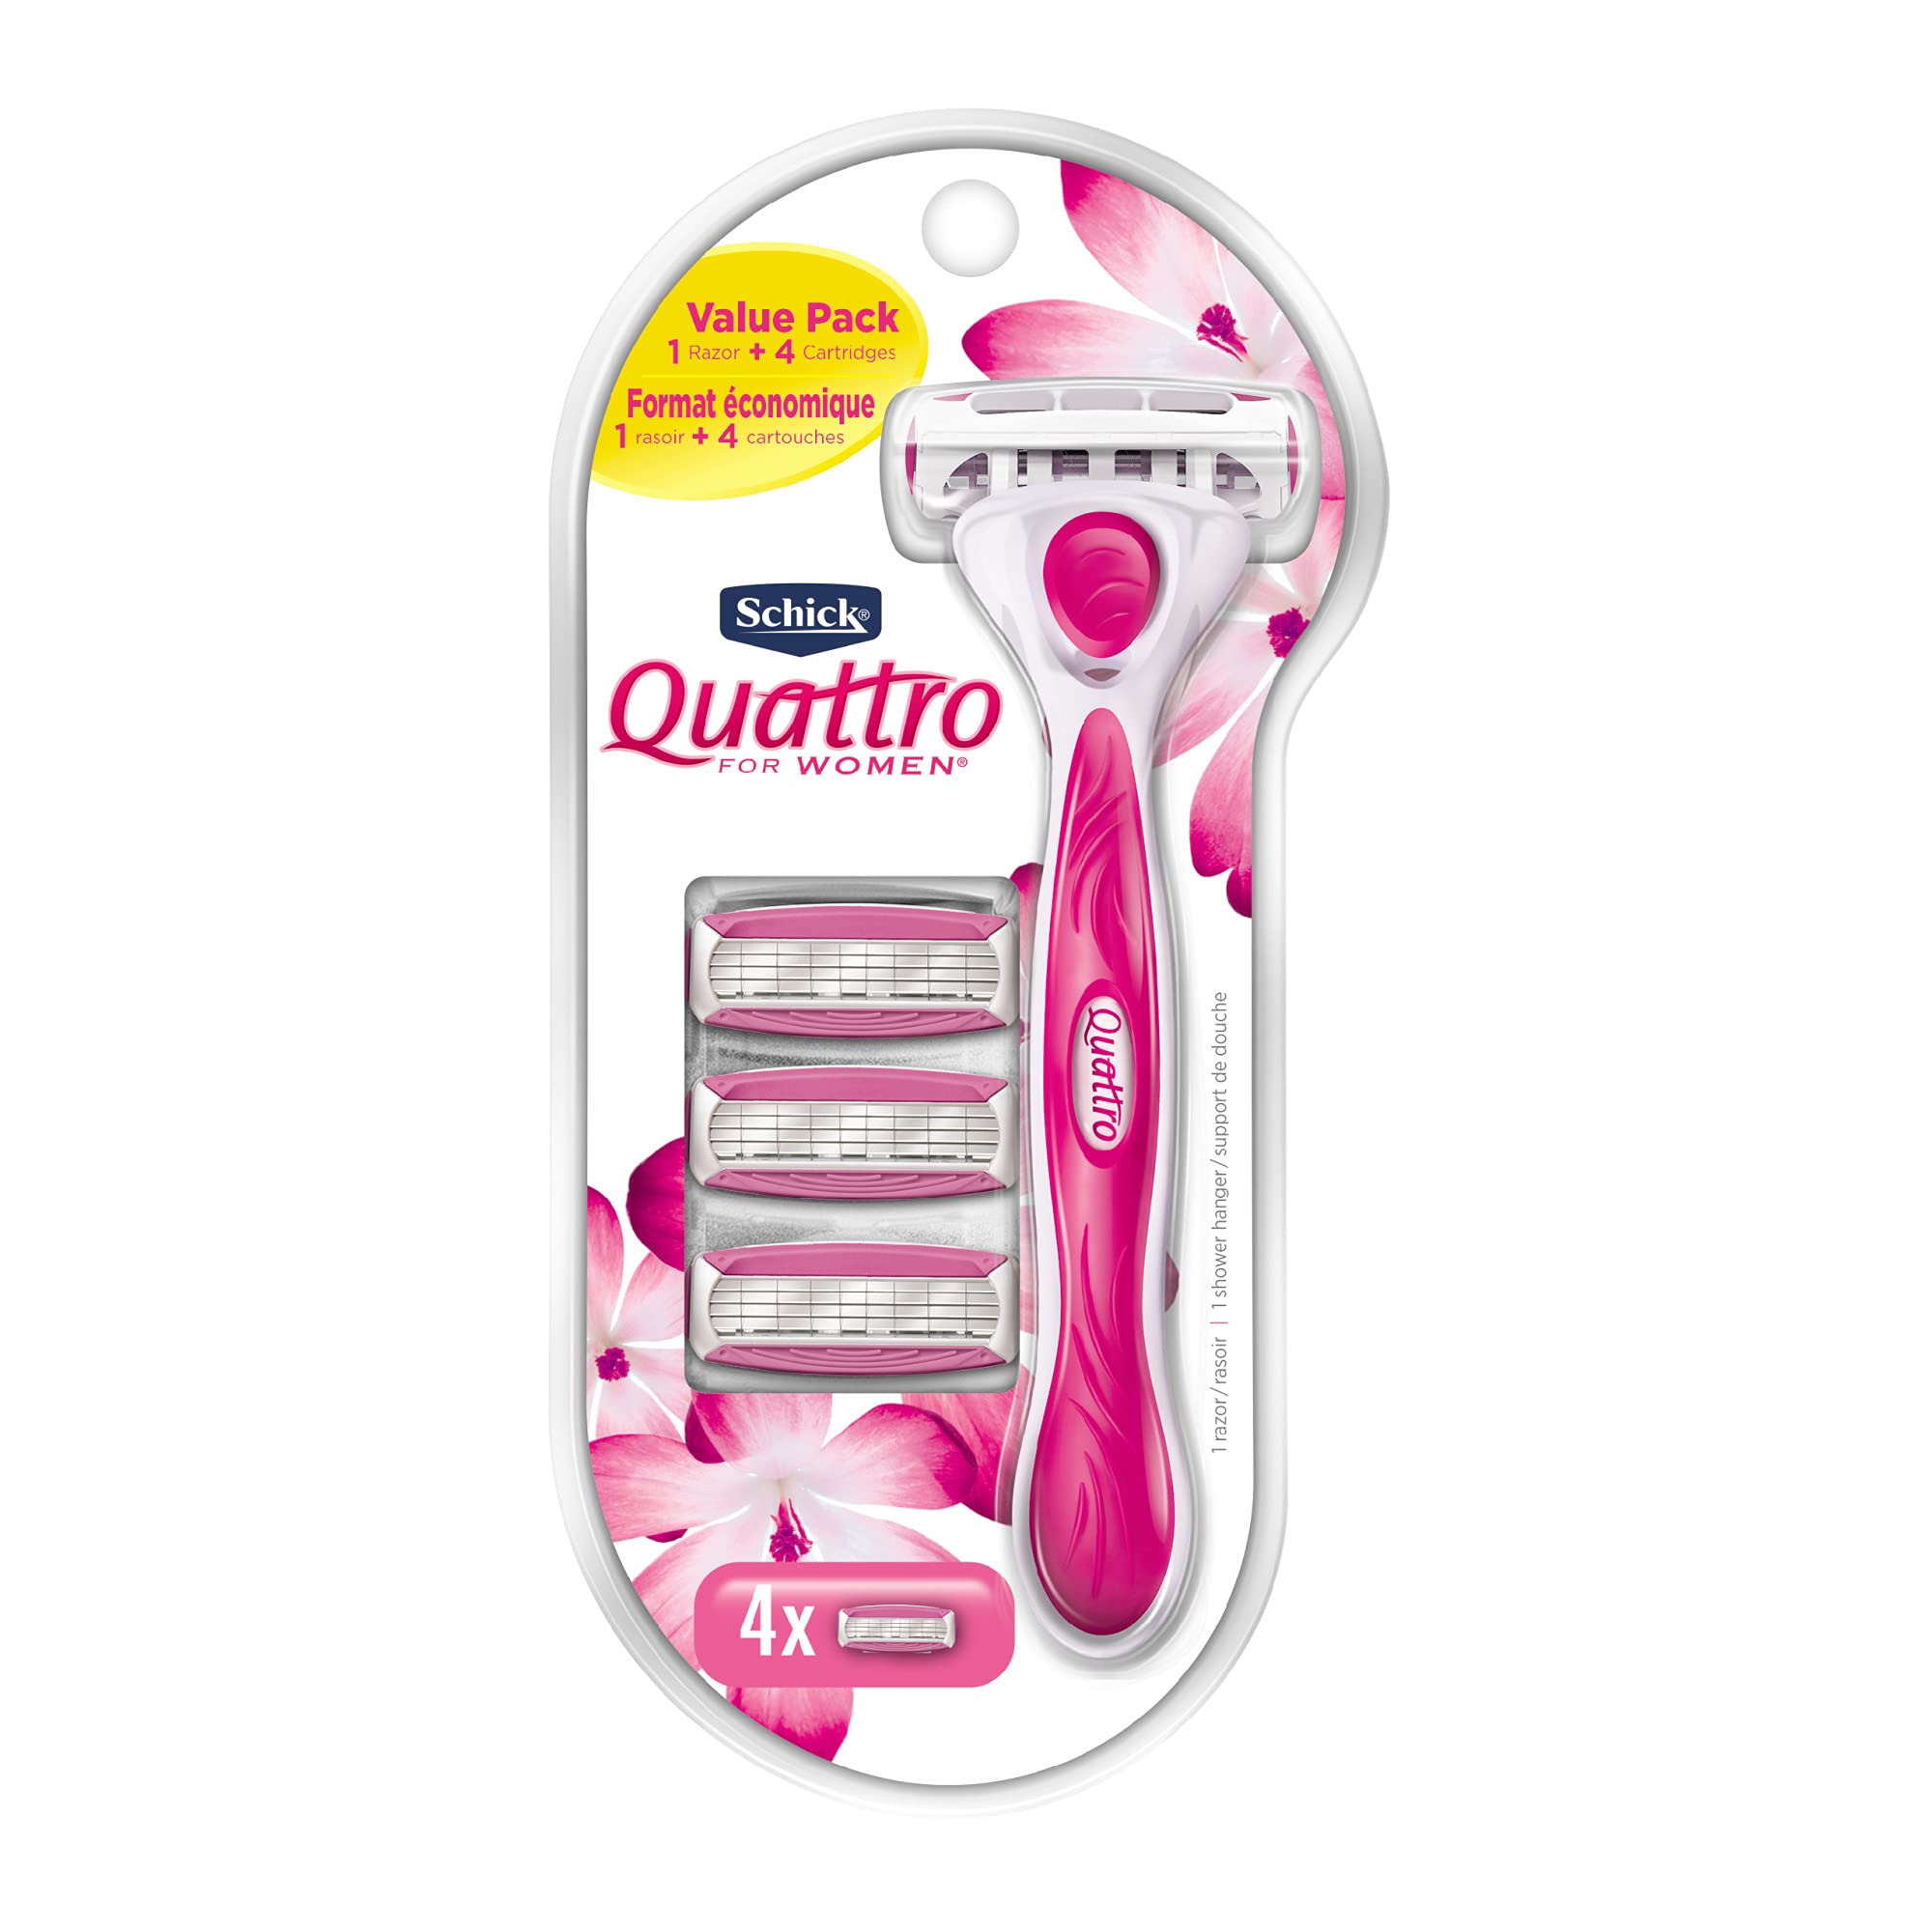 Schick Quattro for Women Value Pack with 1 Razor and 4 Razor Blade Refills